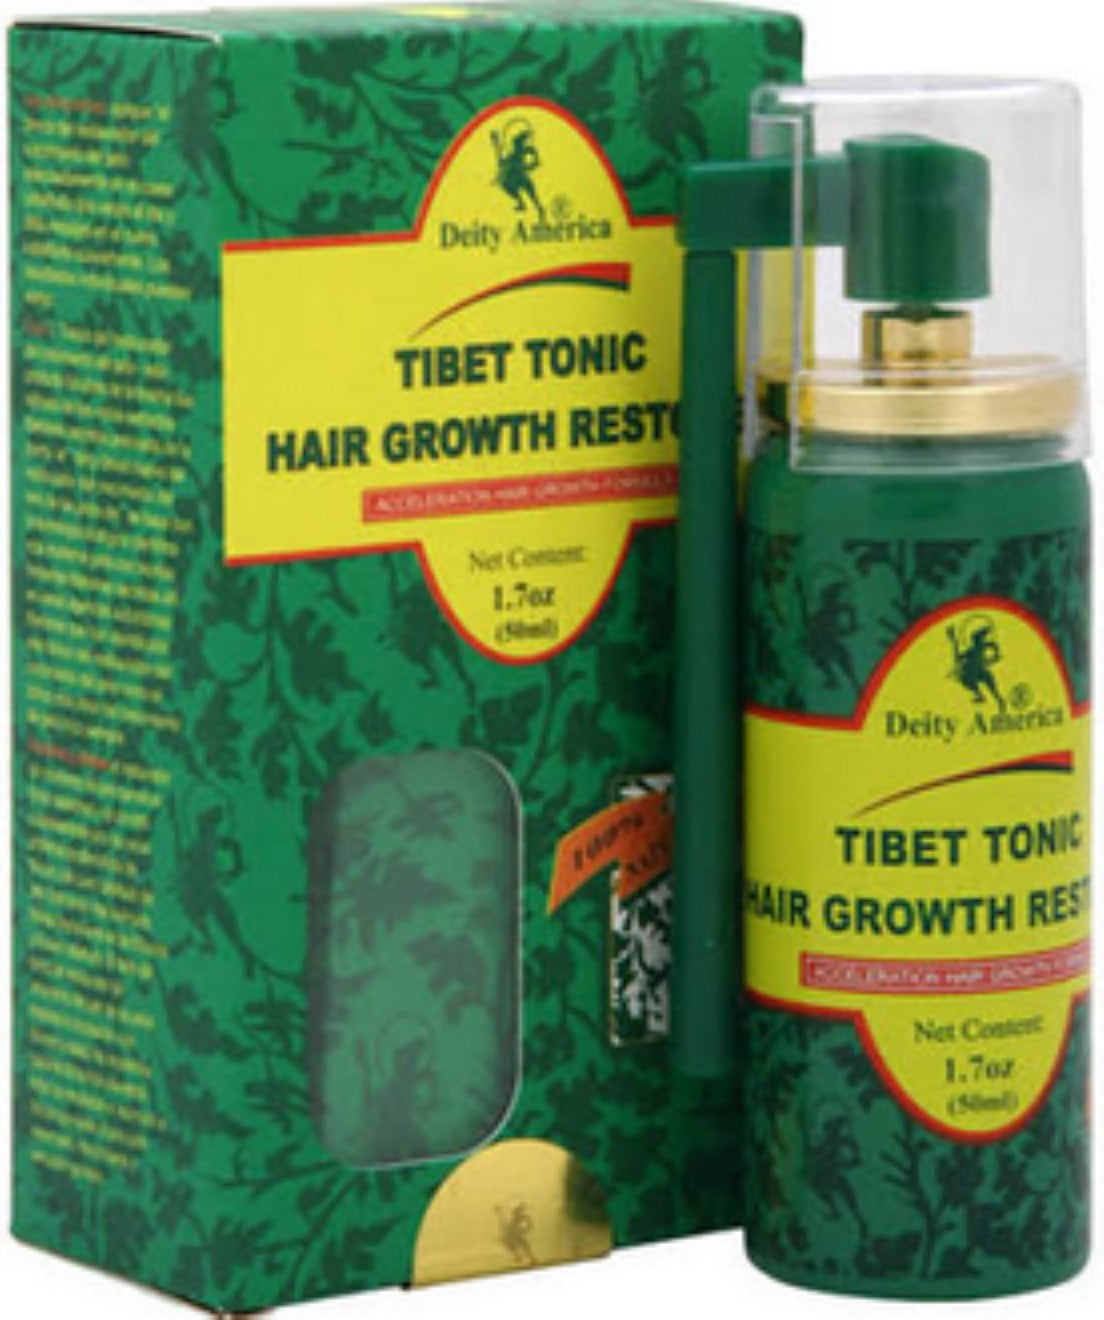 Deity America Tonic Hair Growth Restorer, 1.7 oz